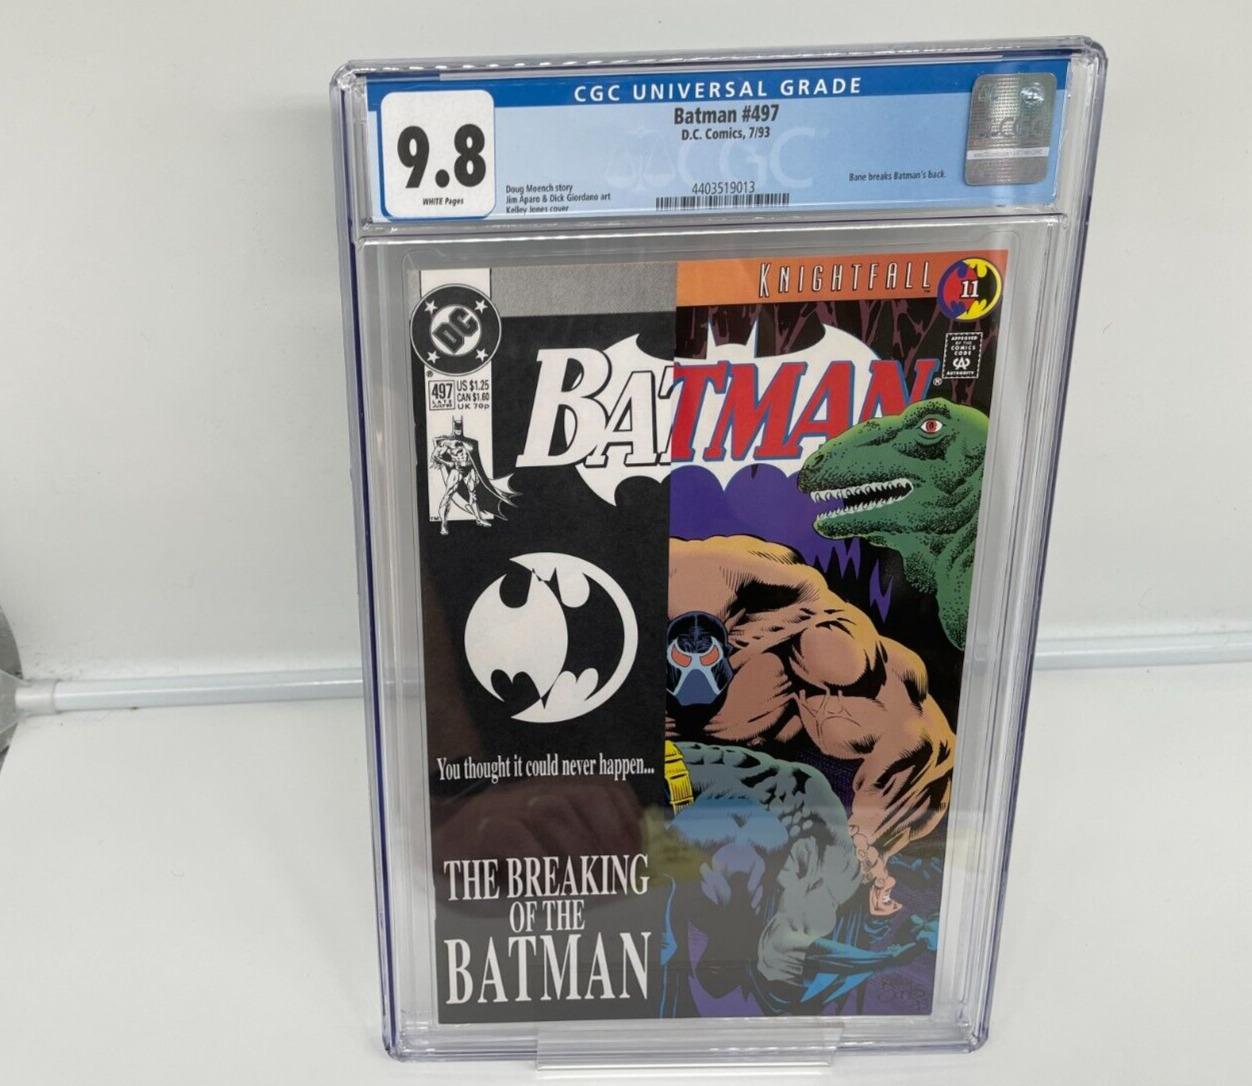 Batman #497 CGC 9.8 Bane Breaks Batmans Back Knightfall 11 DC Comics 1993